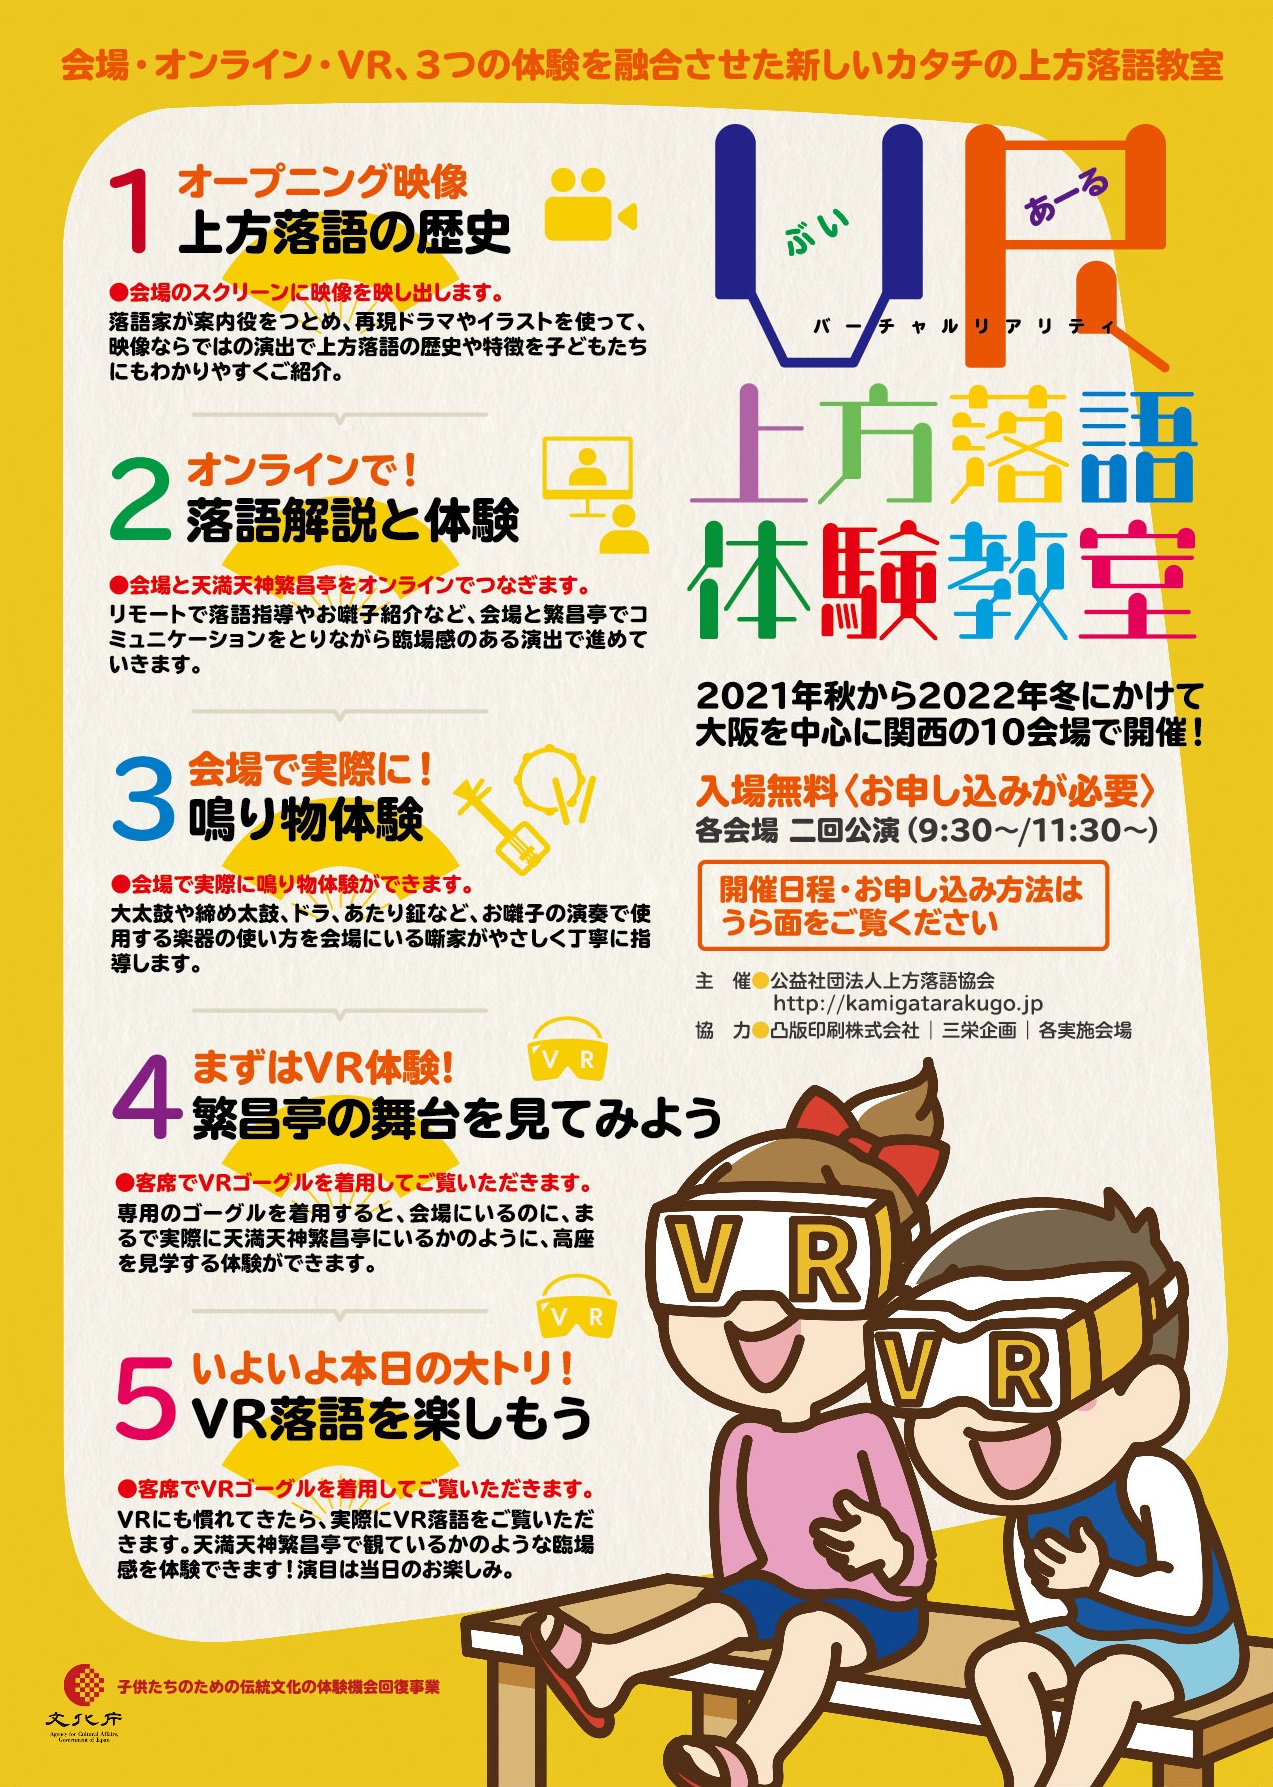 21-11-3 vr-rakugo-ol | 上方落語協会